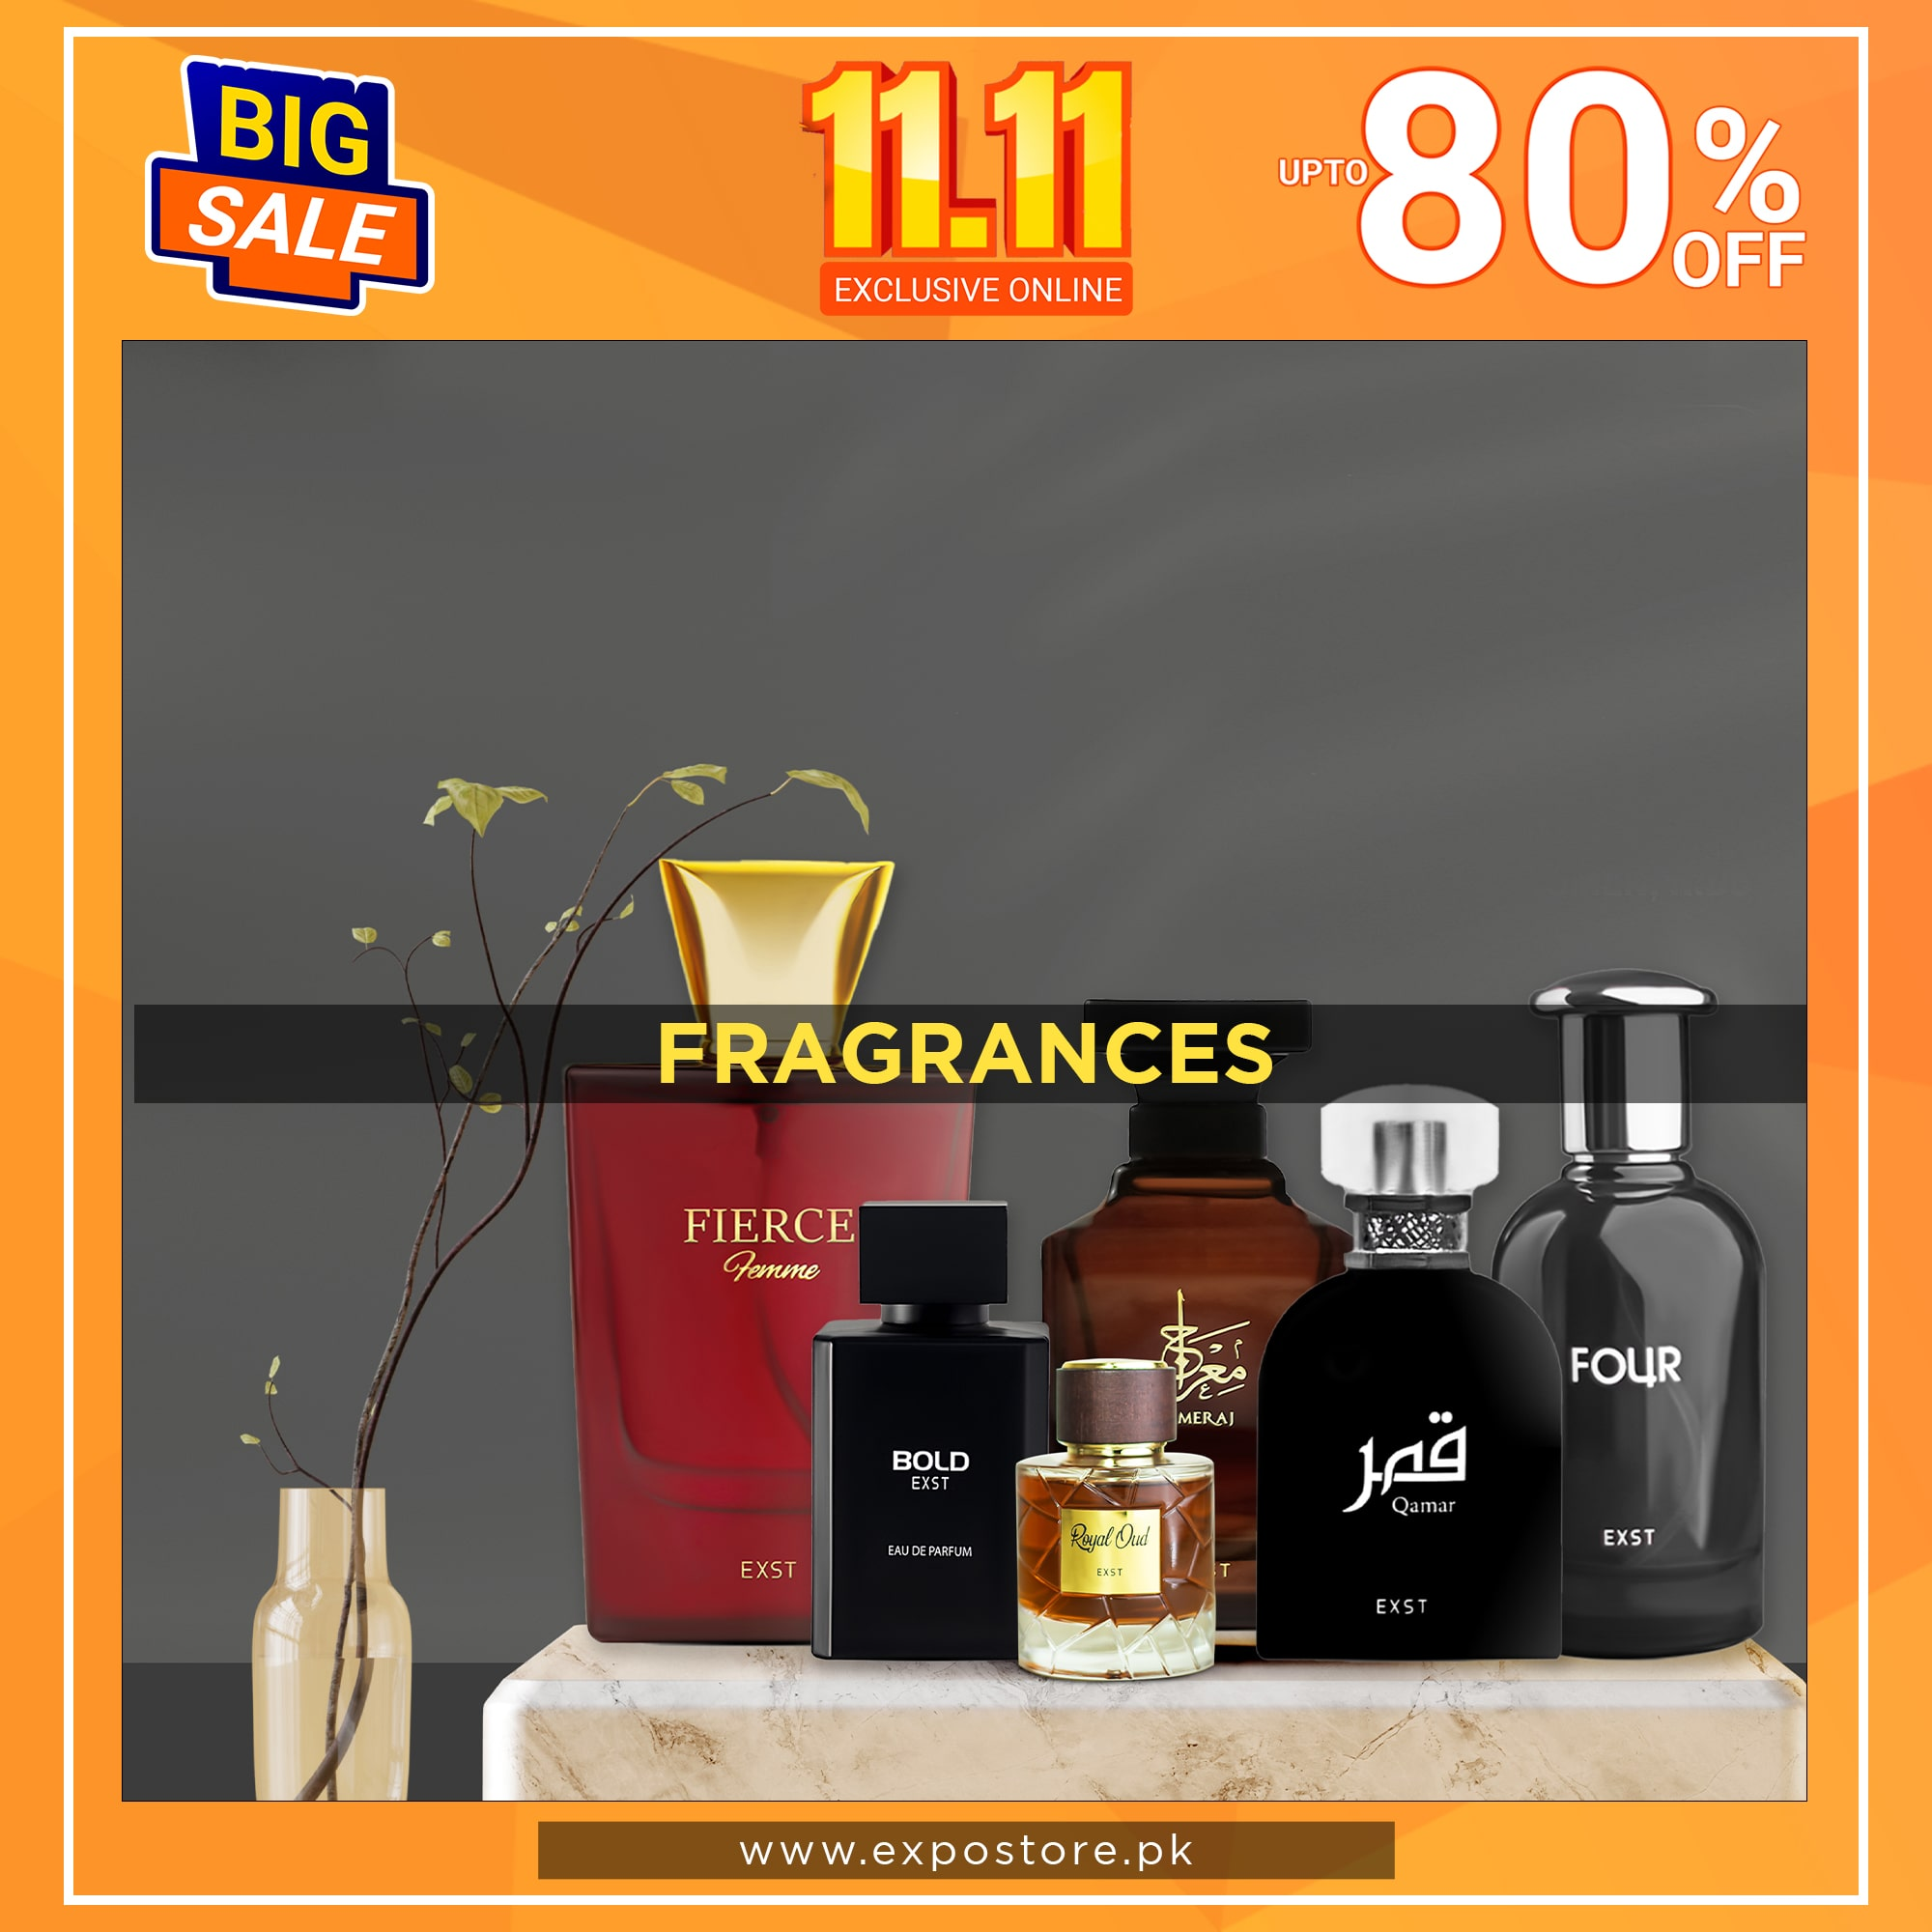 Fragrance sale